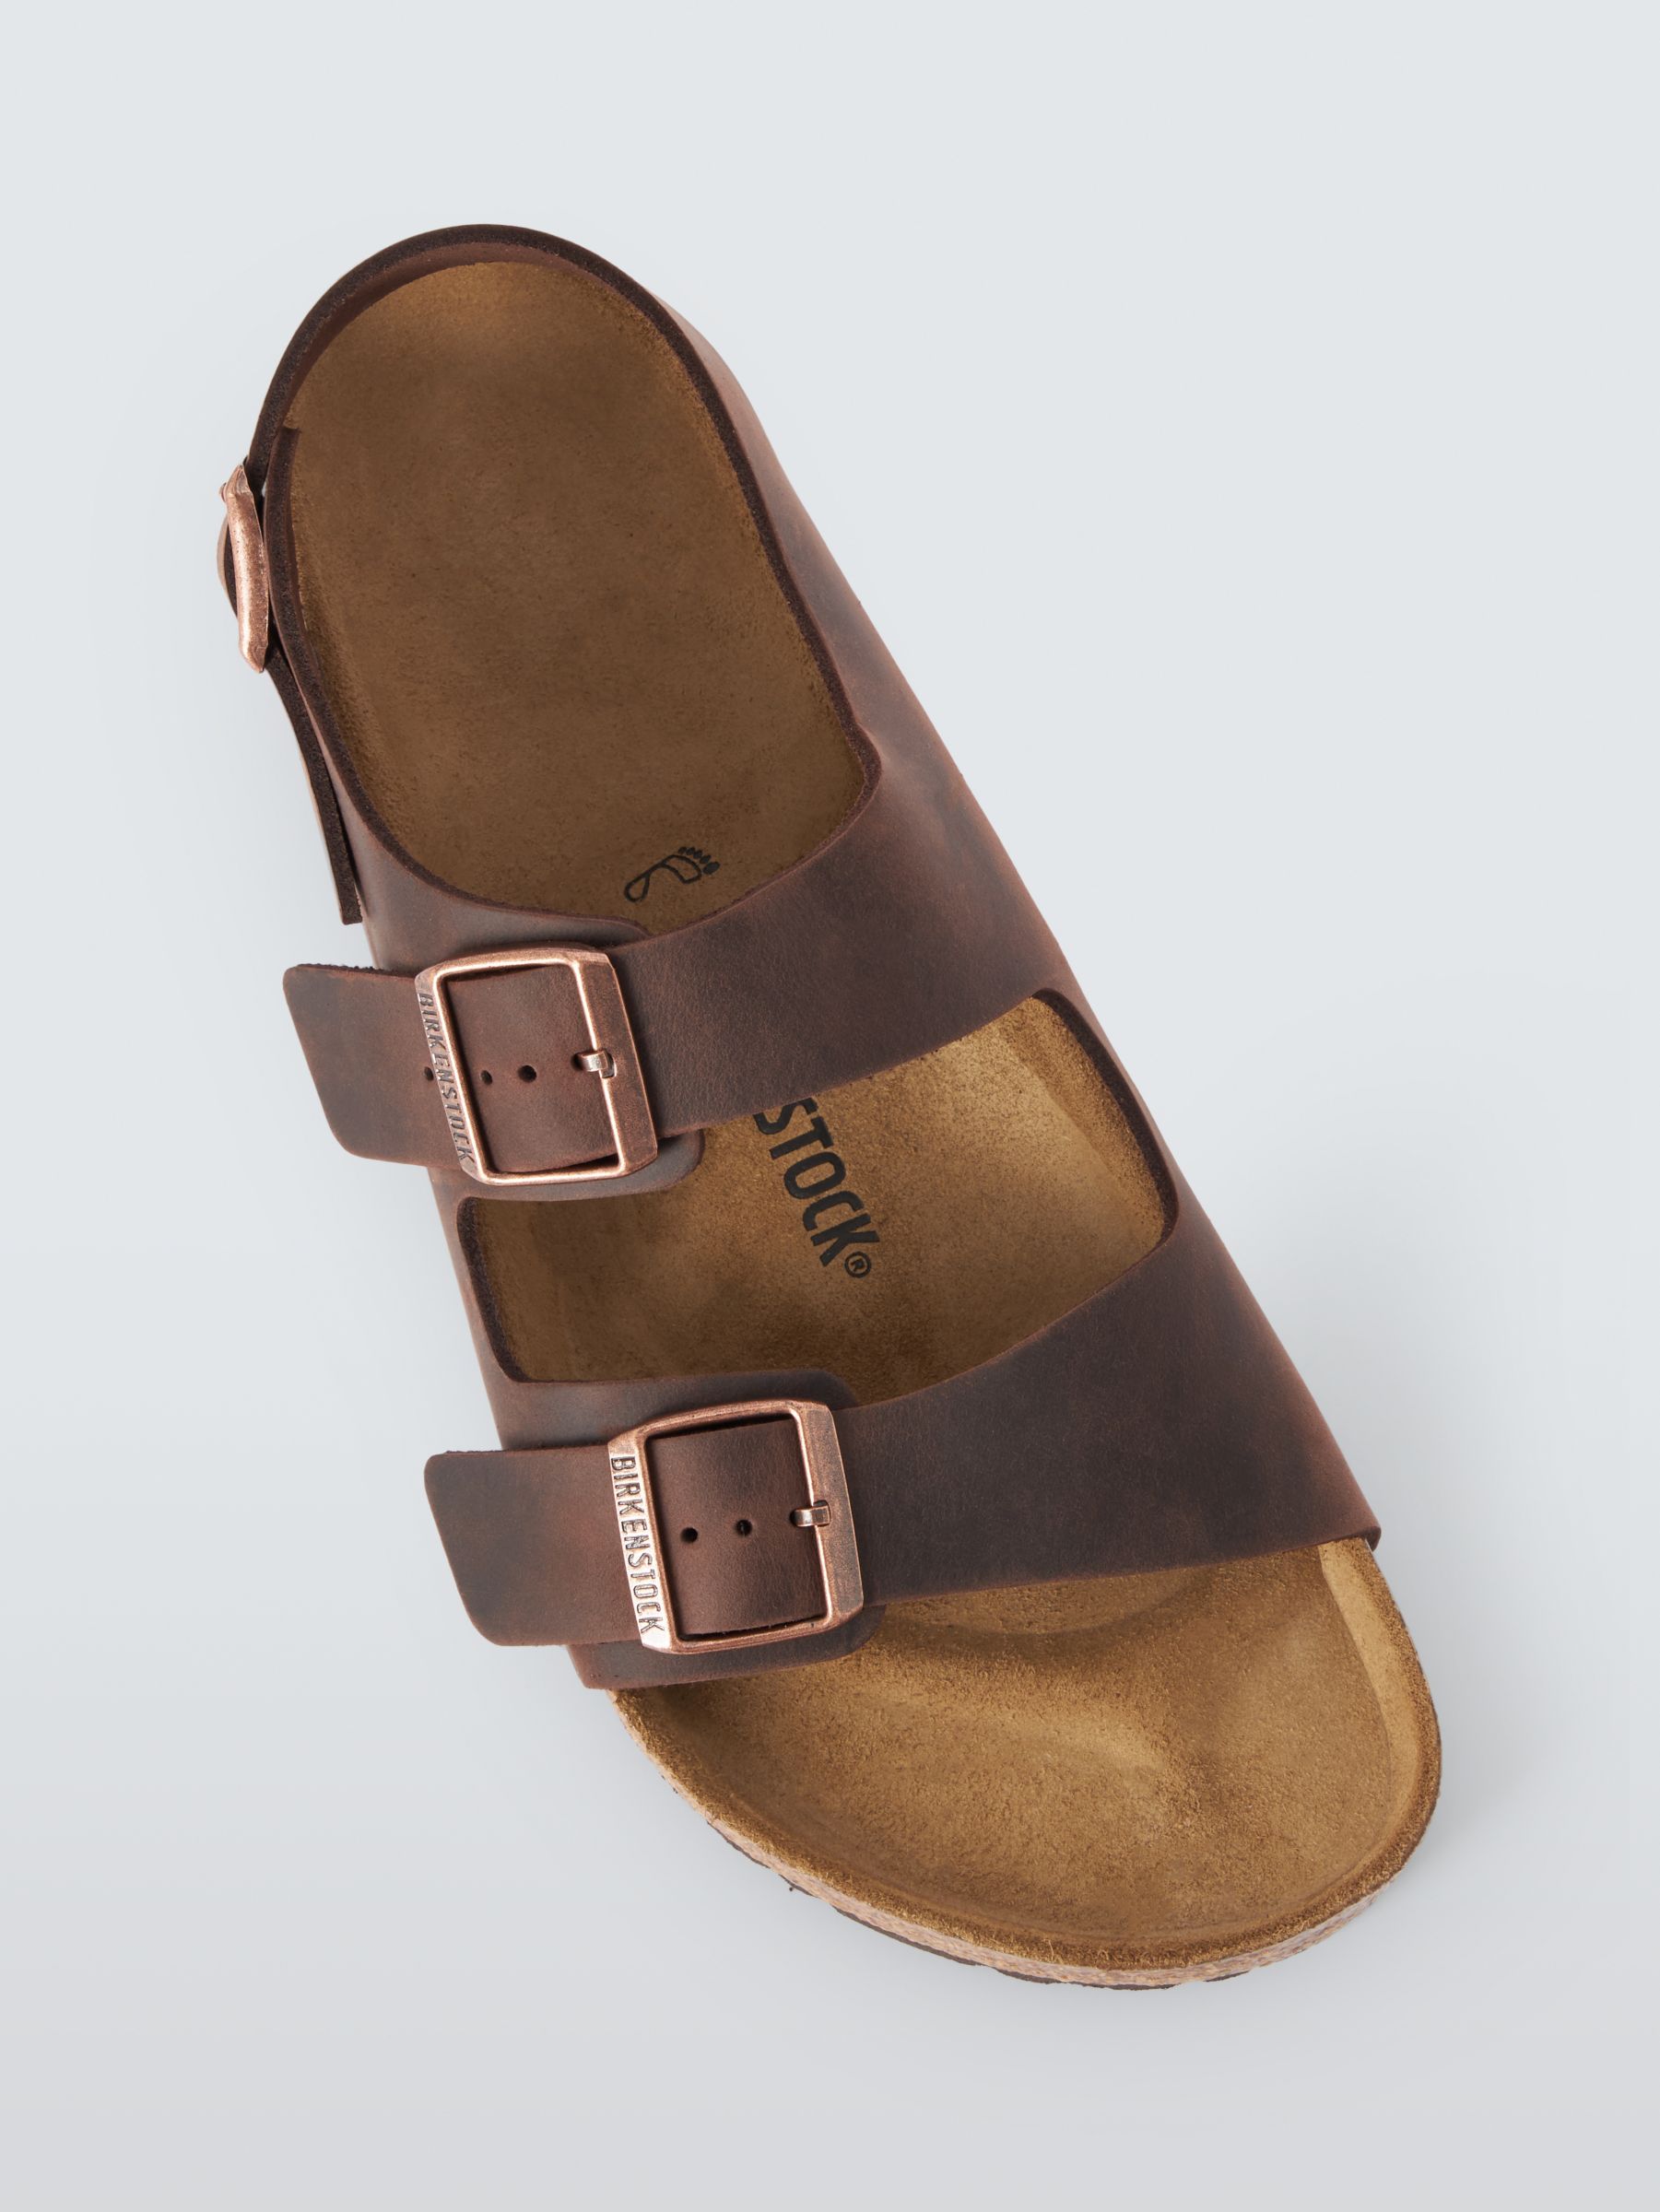 Birkenstock Milano Leather Footbed Sandals, Oil Brown, 7.5